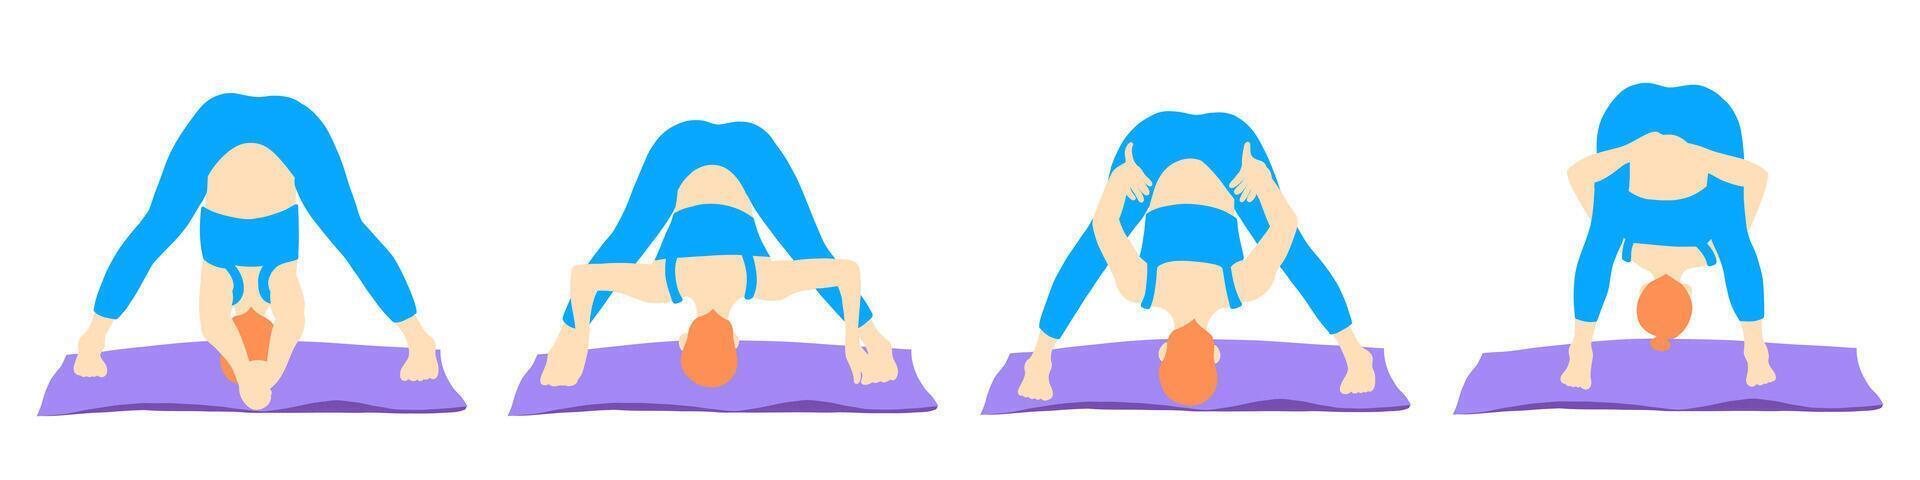 Set of yoga poses ginger girl vector